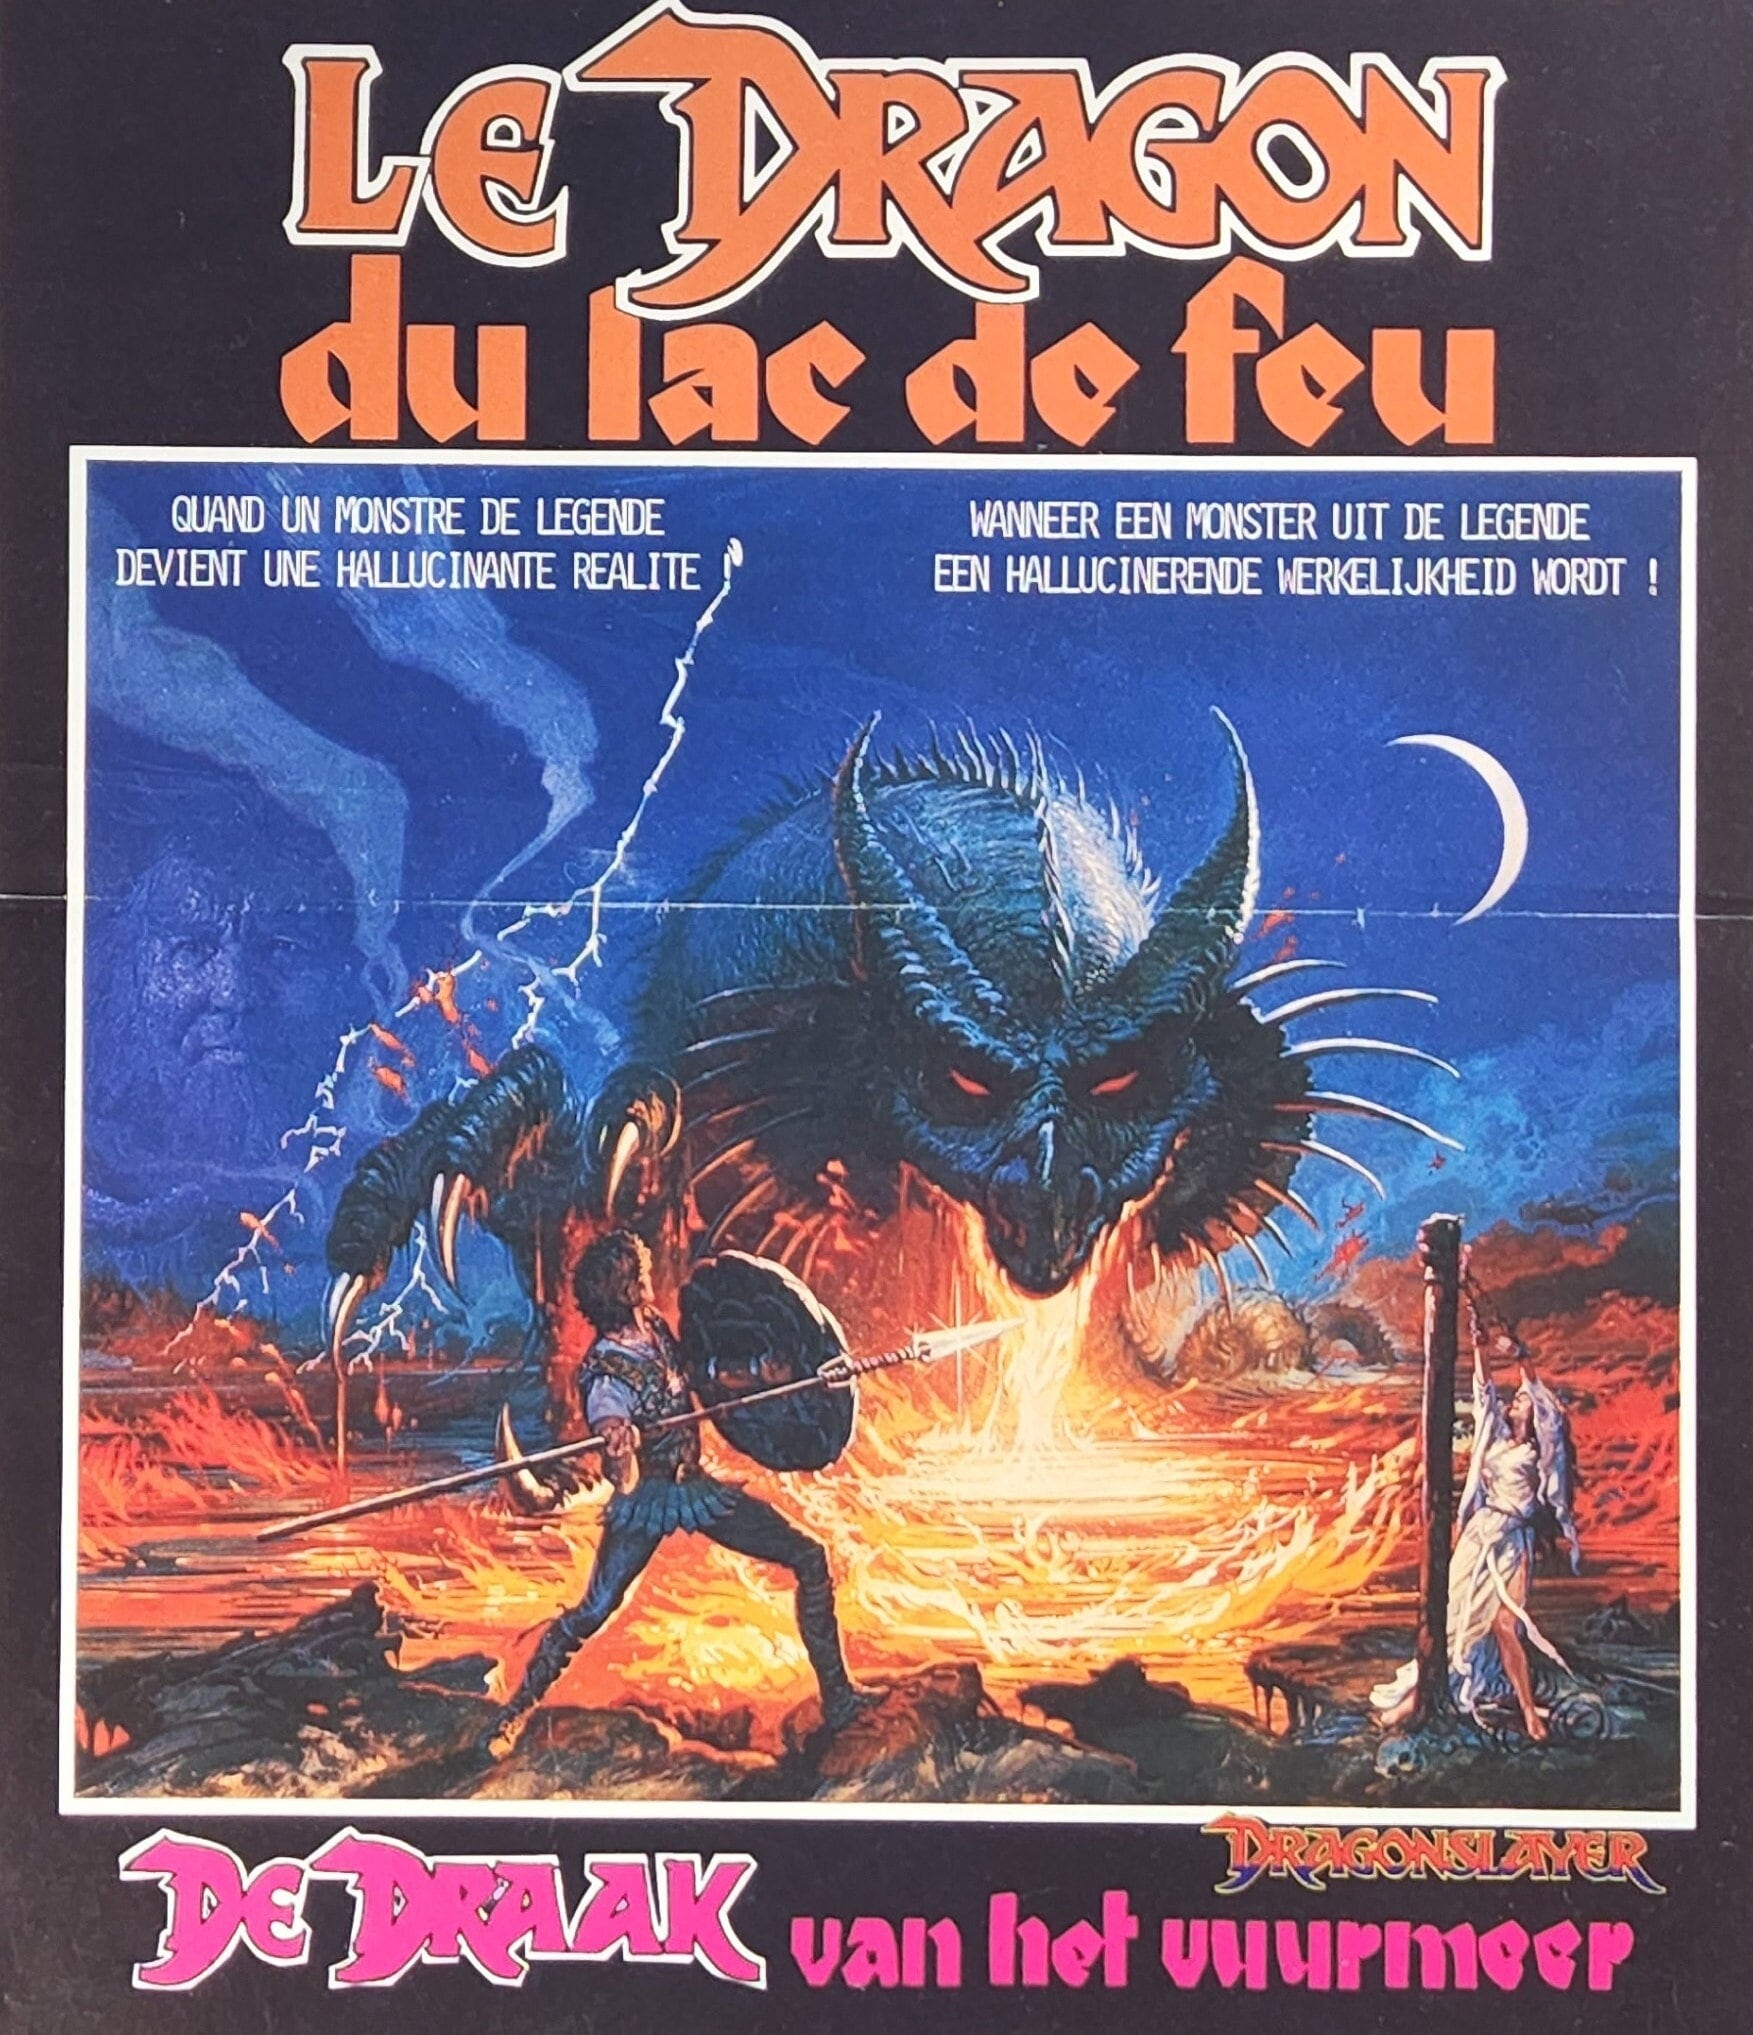 Dragonslayer (1981) Original French Grande Movie Poster - Original Film Art  - Vintage Movie Posters